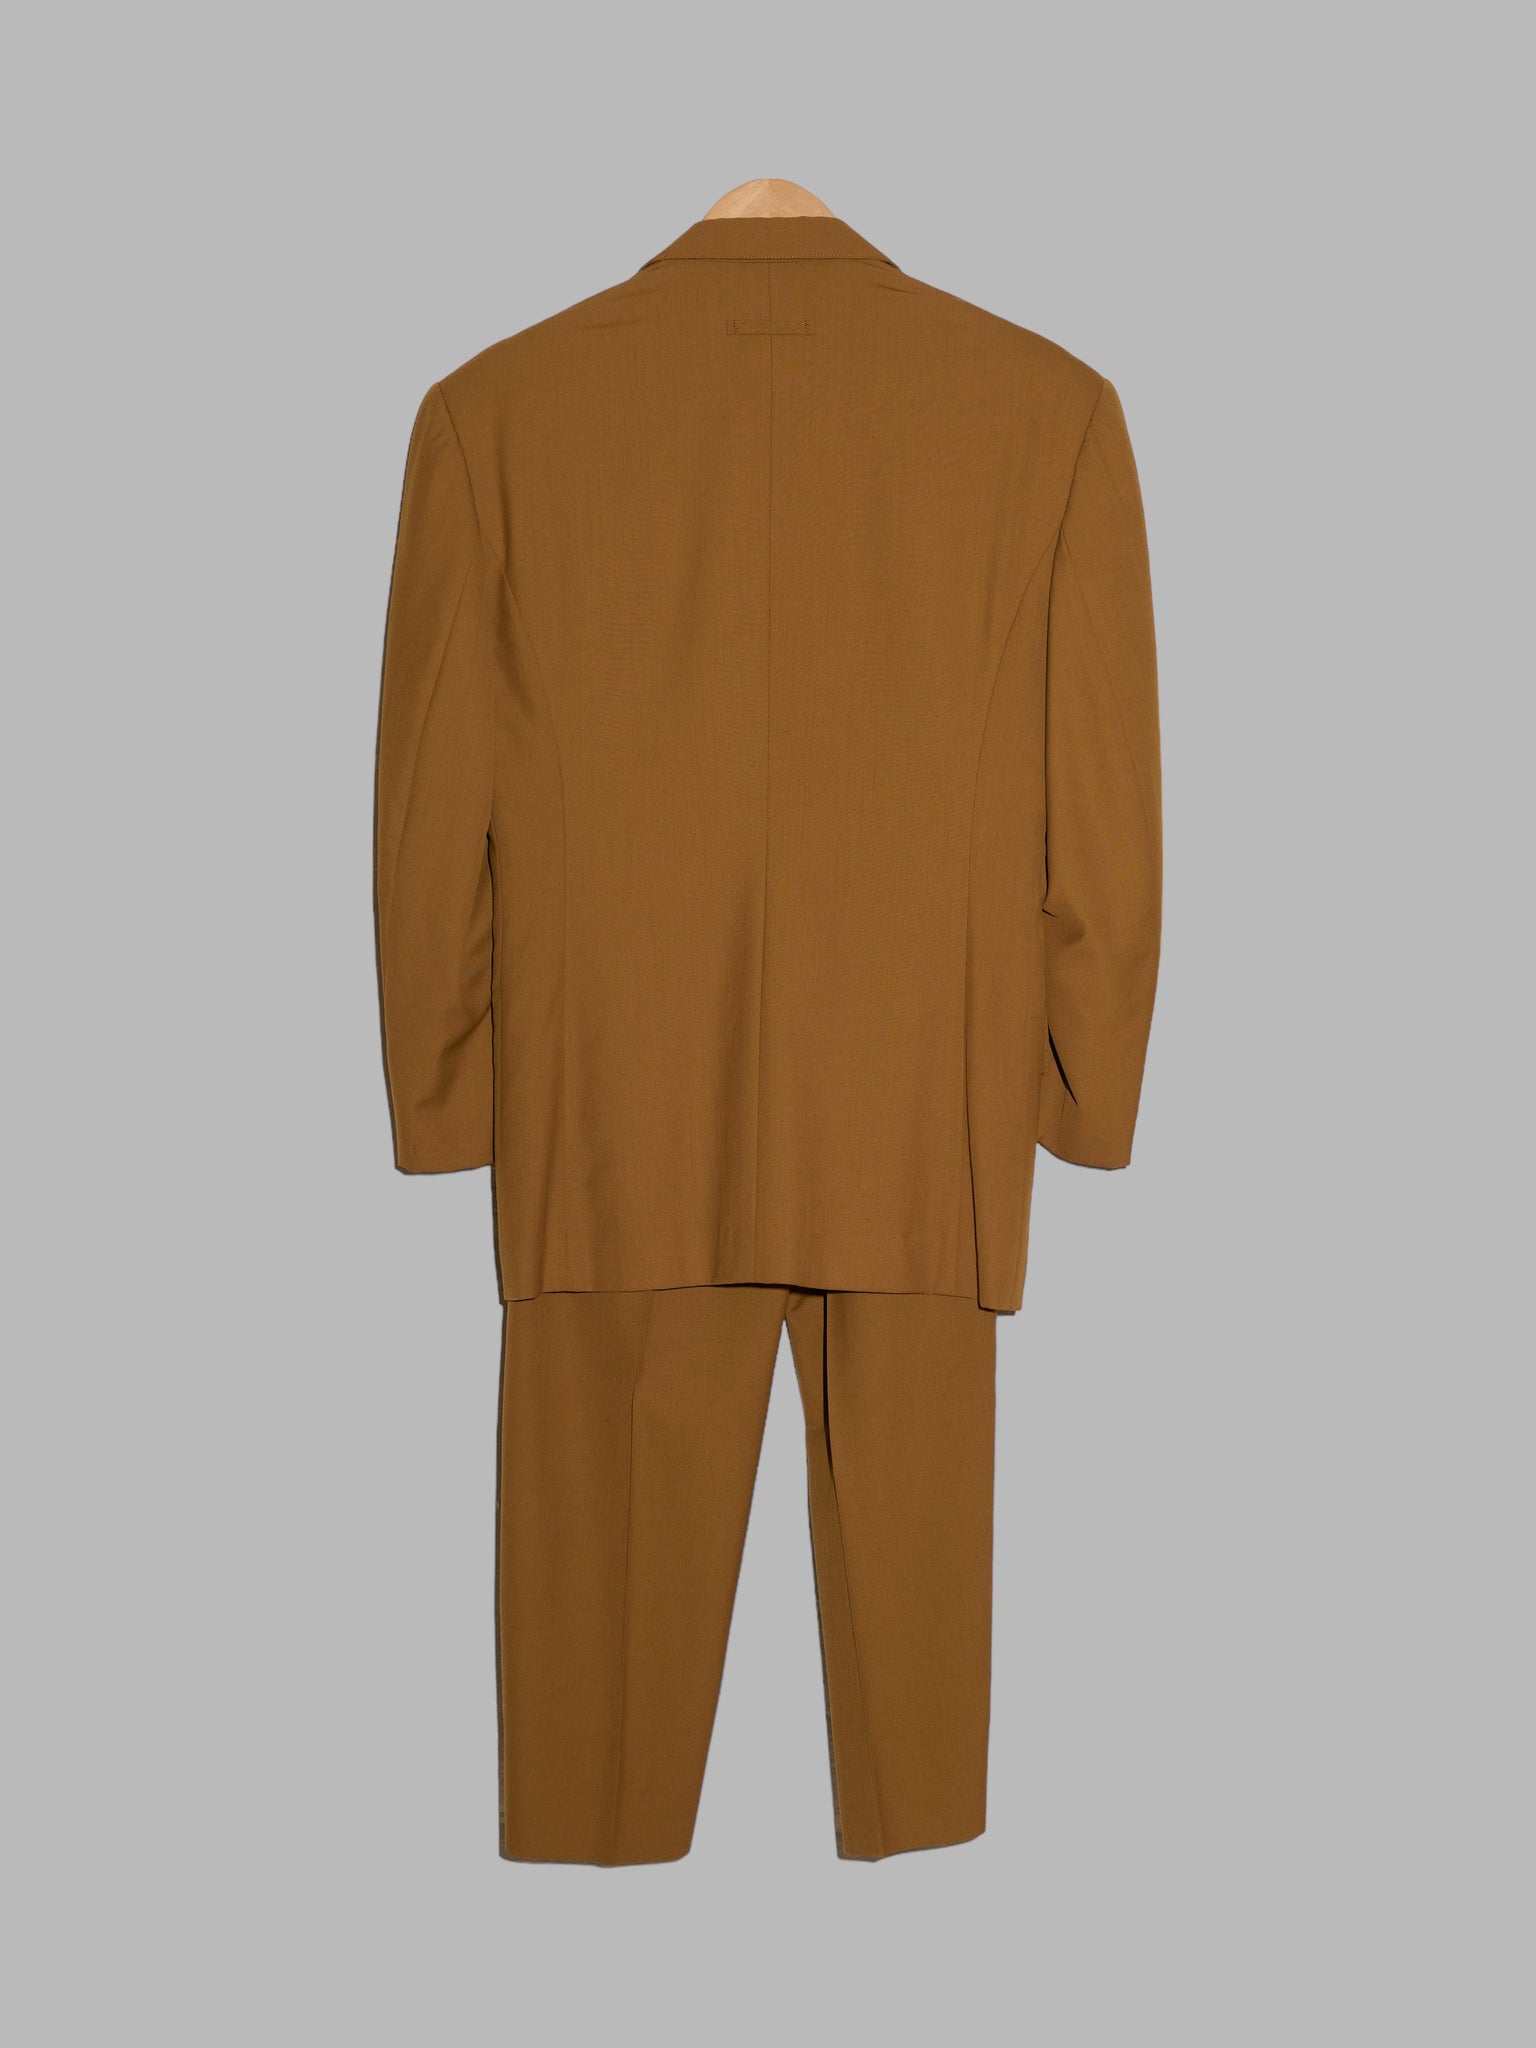 Jean Paul Gaultier Homme 1990s mustard wool three button trouser suit